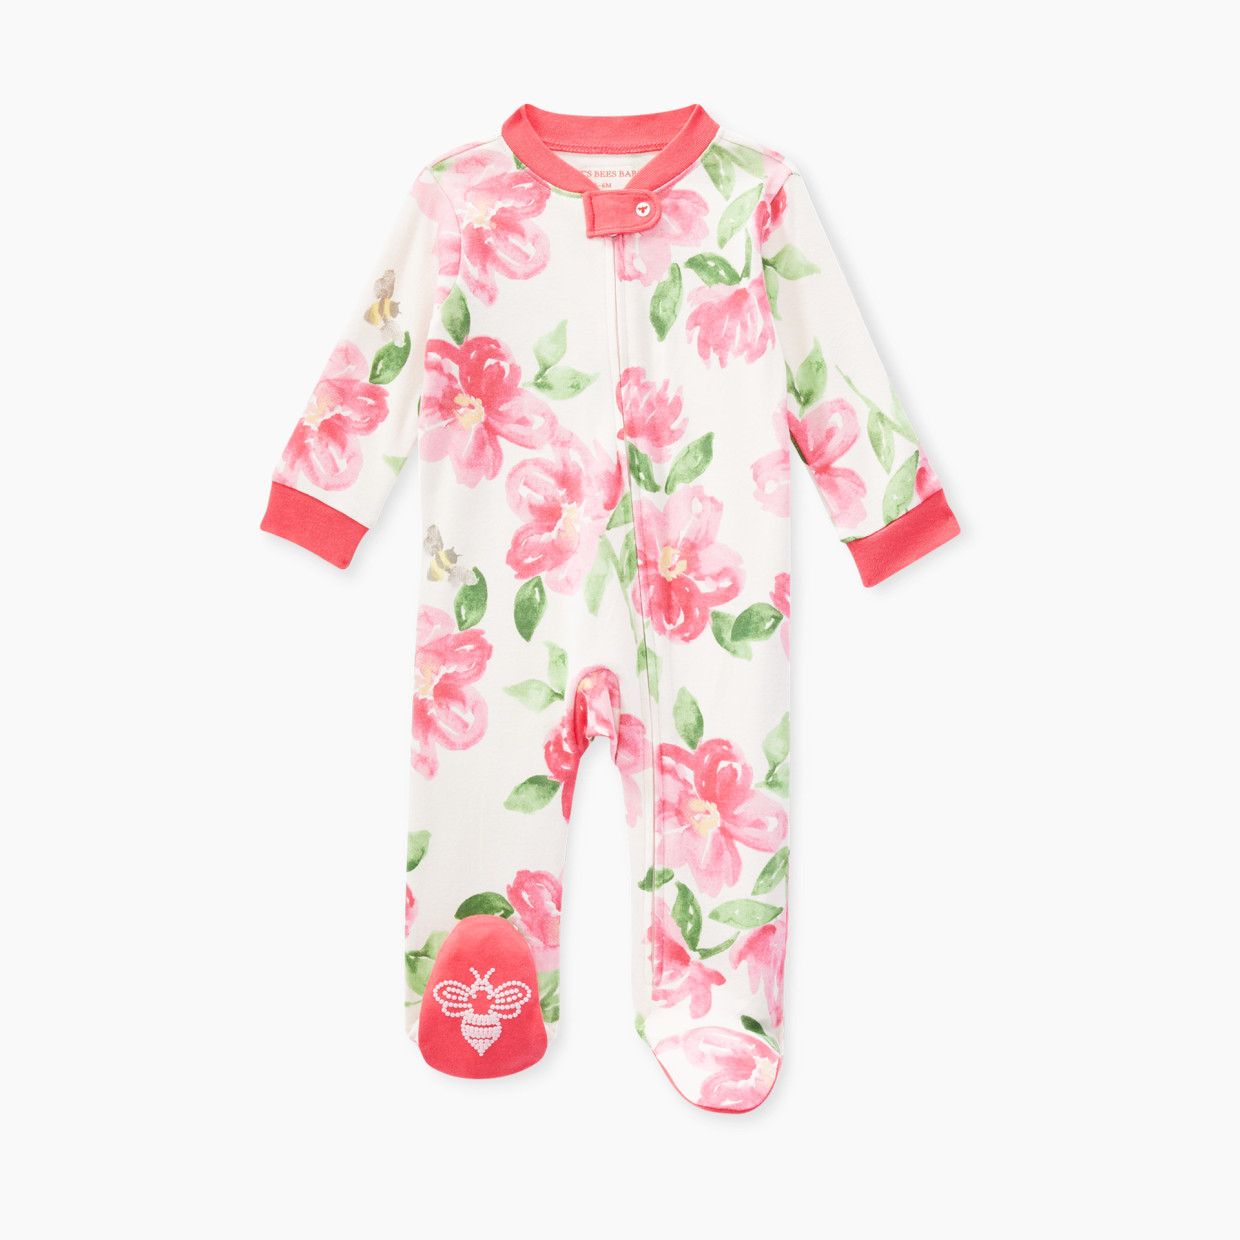 Burt's Bees Baby 100% Organic Cotton Sleep & Play Footie Pajamas - Farm Floral, 3-6 Months.